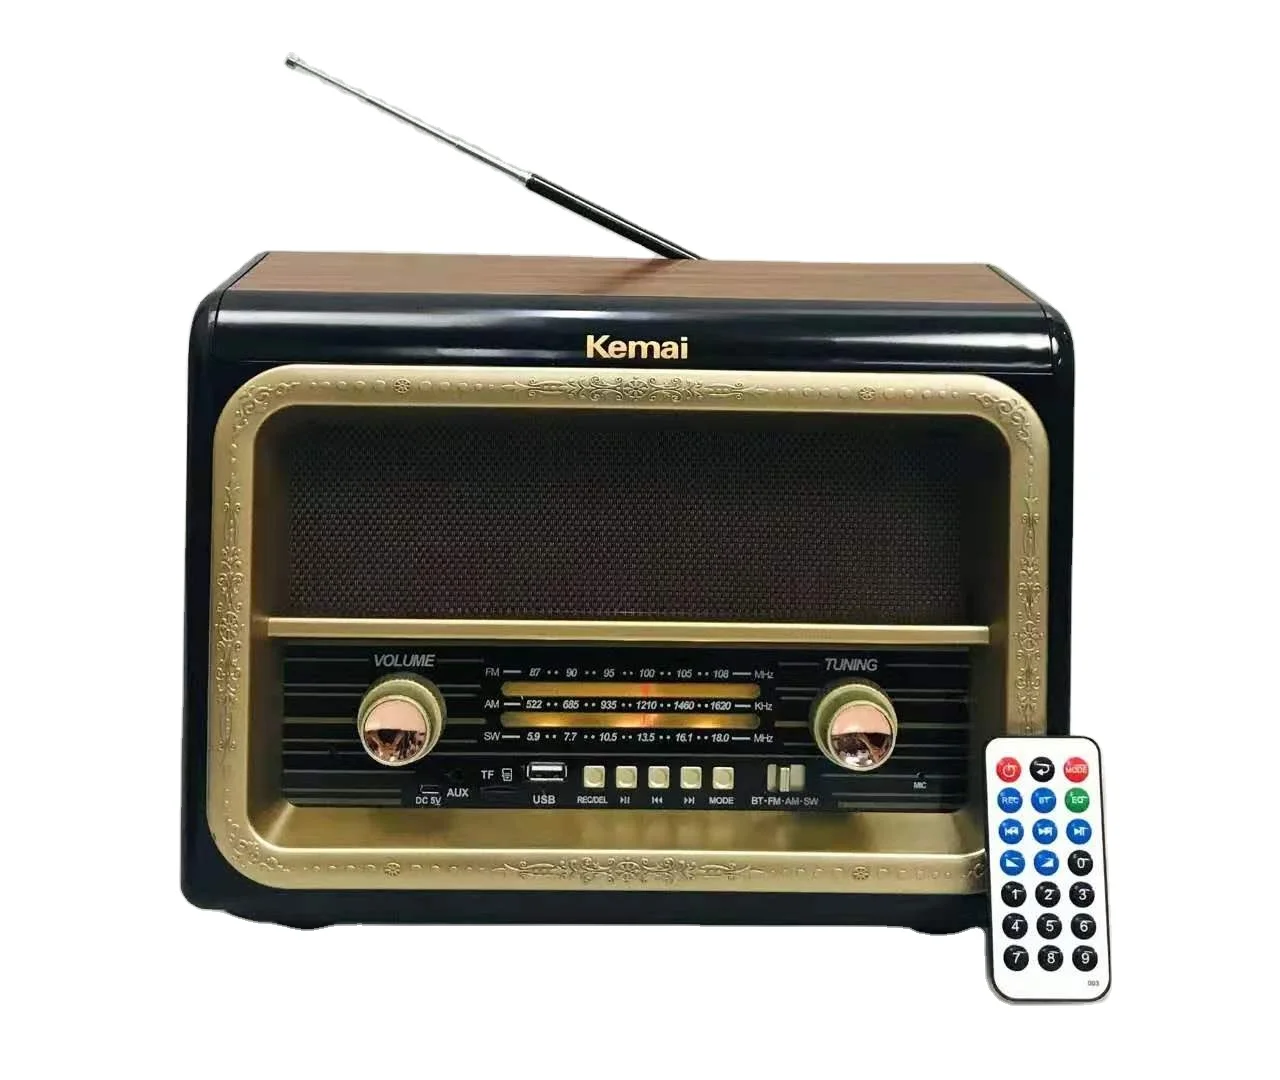 

Kemai MD-1911BT AM FM SW FM AM SW 3 Band Vintage Retro Radio wooden Radio With USB SD TF Mp3 Player Blue Tooth Speaker, Oem